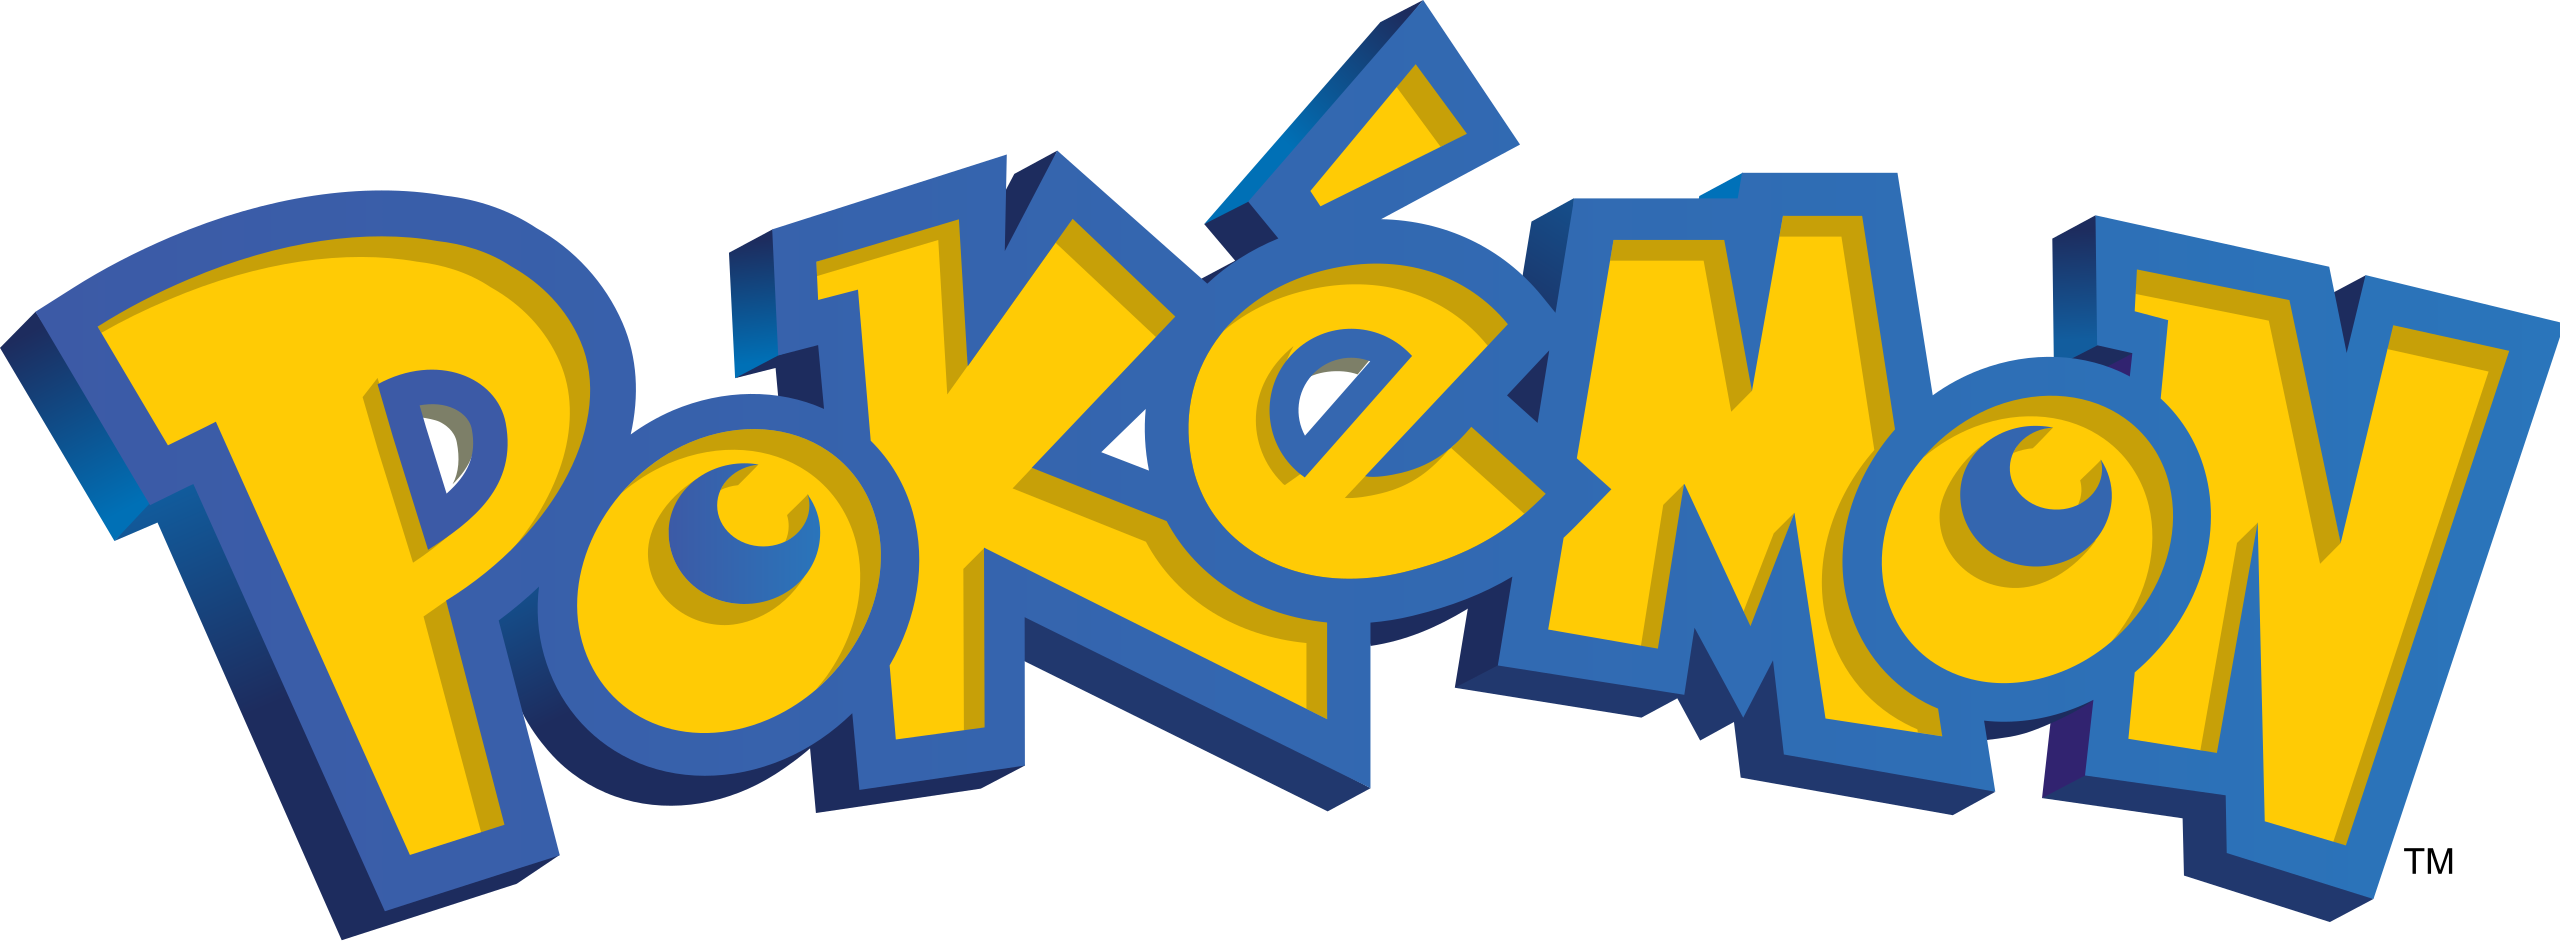 Deoxys and Zeraora VSTAR, VMAX get their Pokémon TCG release date